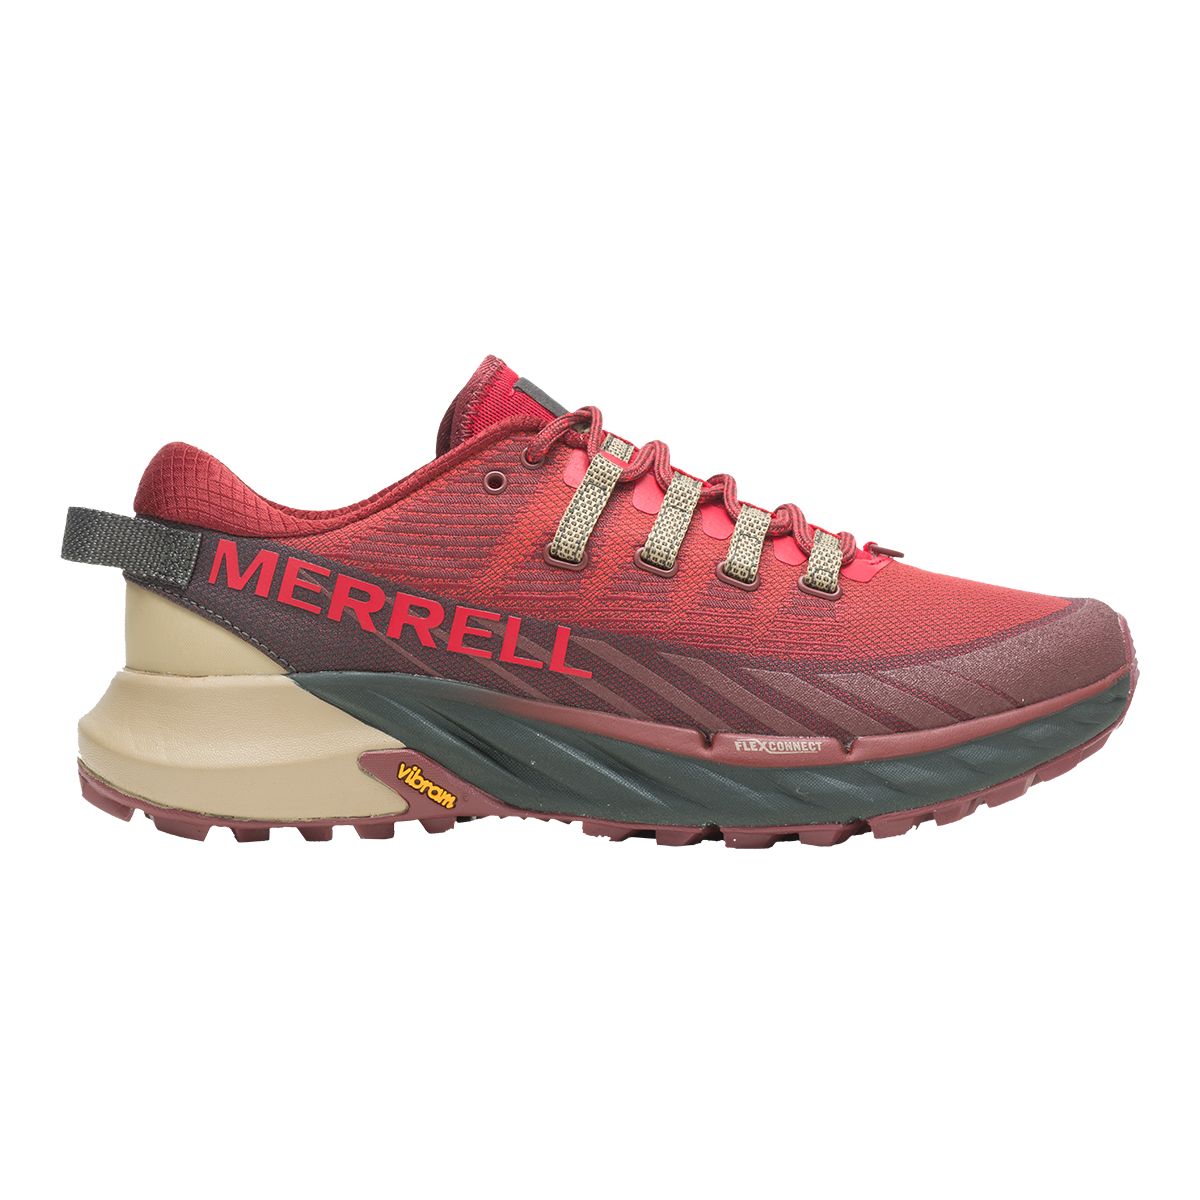 Merrell Men's Agility Peak 4 Trail Running Shoes, Low-Cut, Knit ...